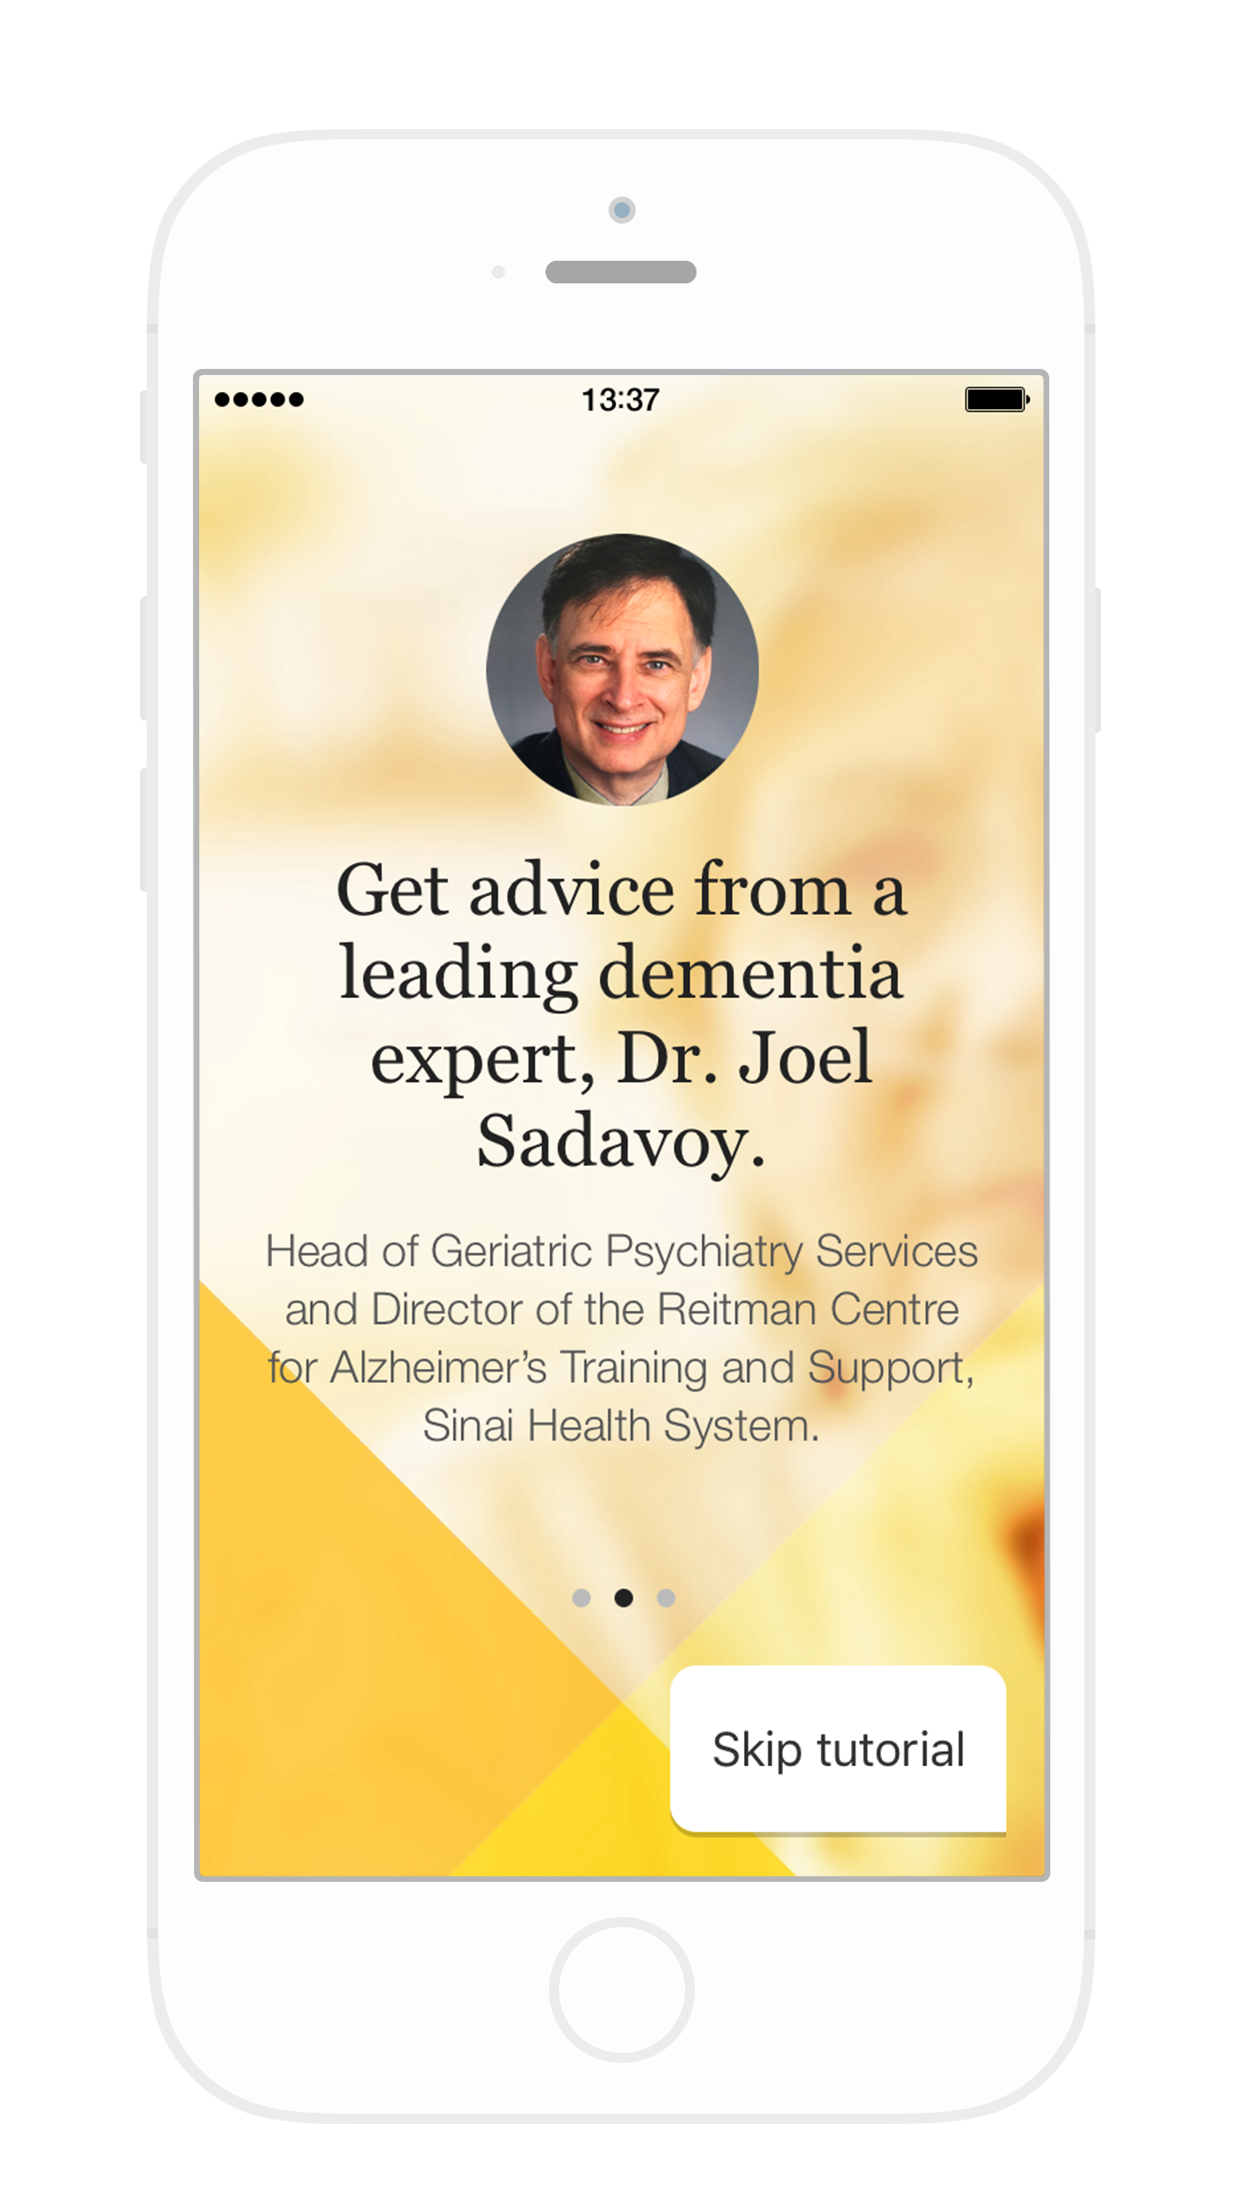 Dementia Advisor app screenshot, Get advice from a leading dementia expert, Dr. Joel Sadavoy